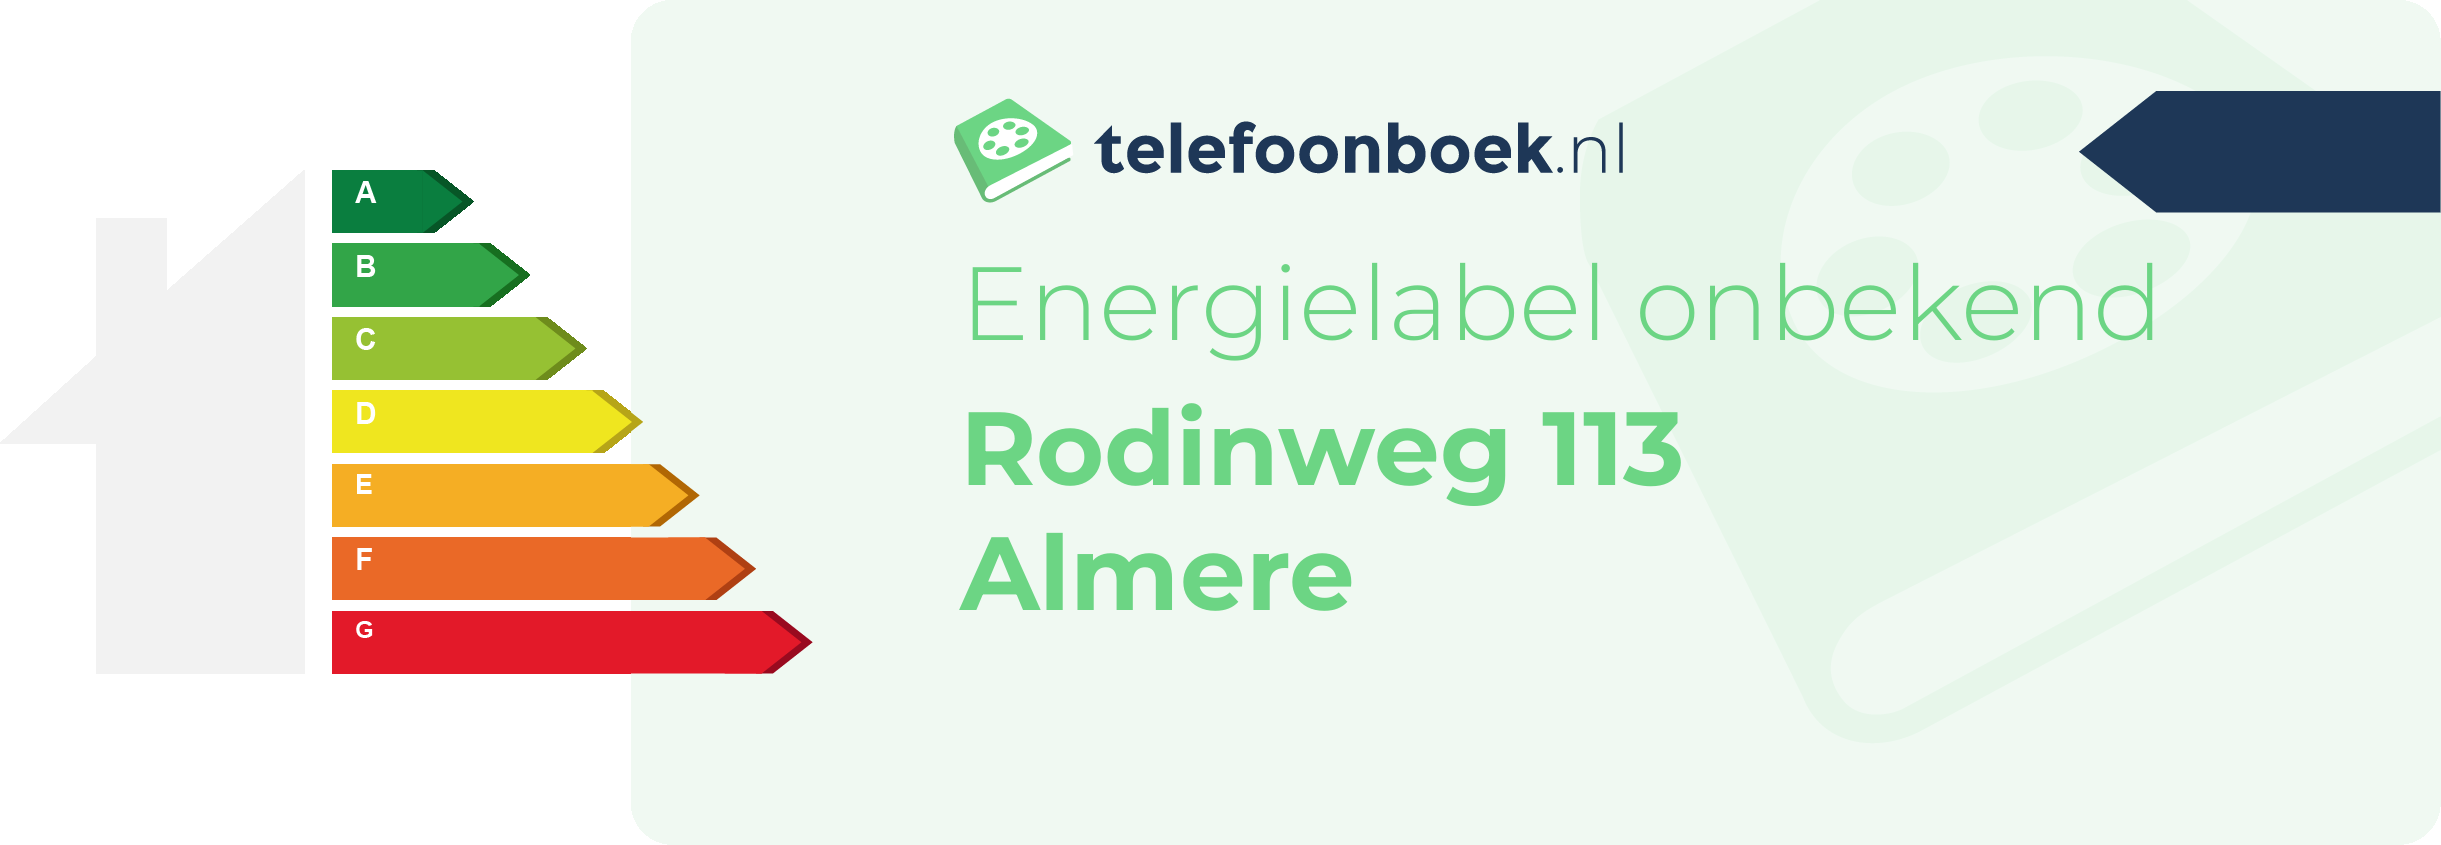 Energielabel Rodinweg 113 Almere